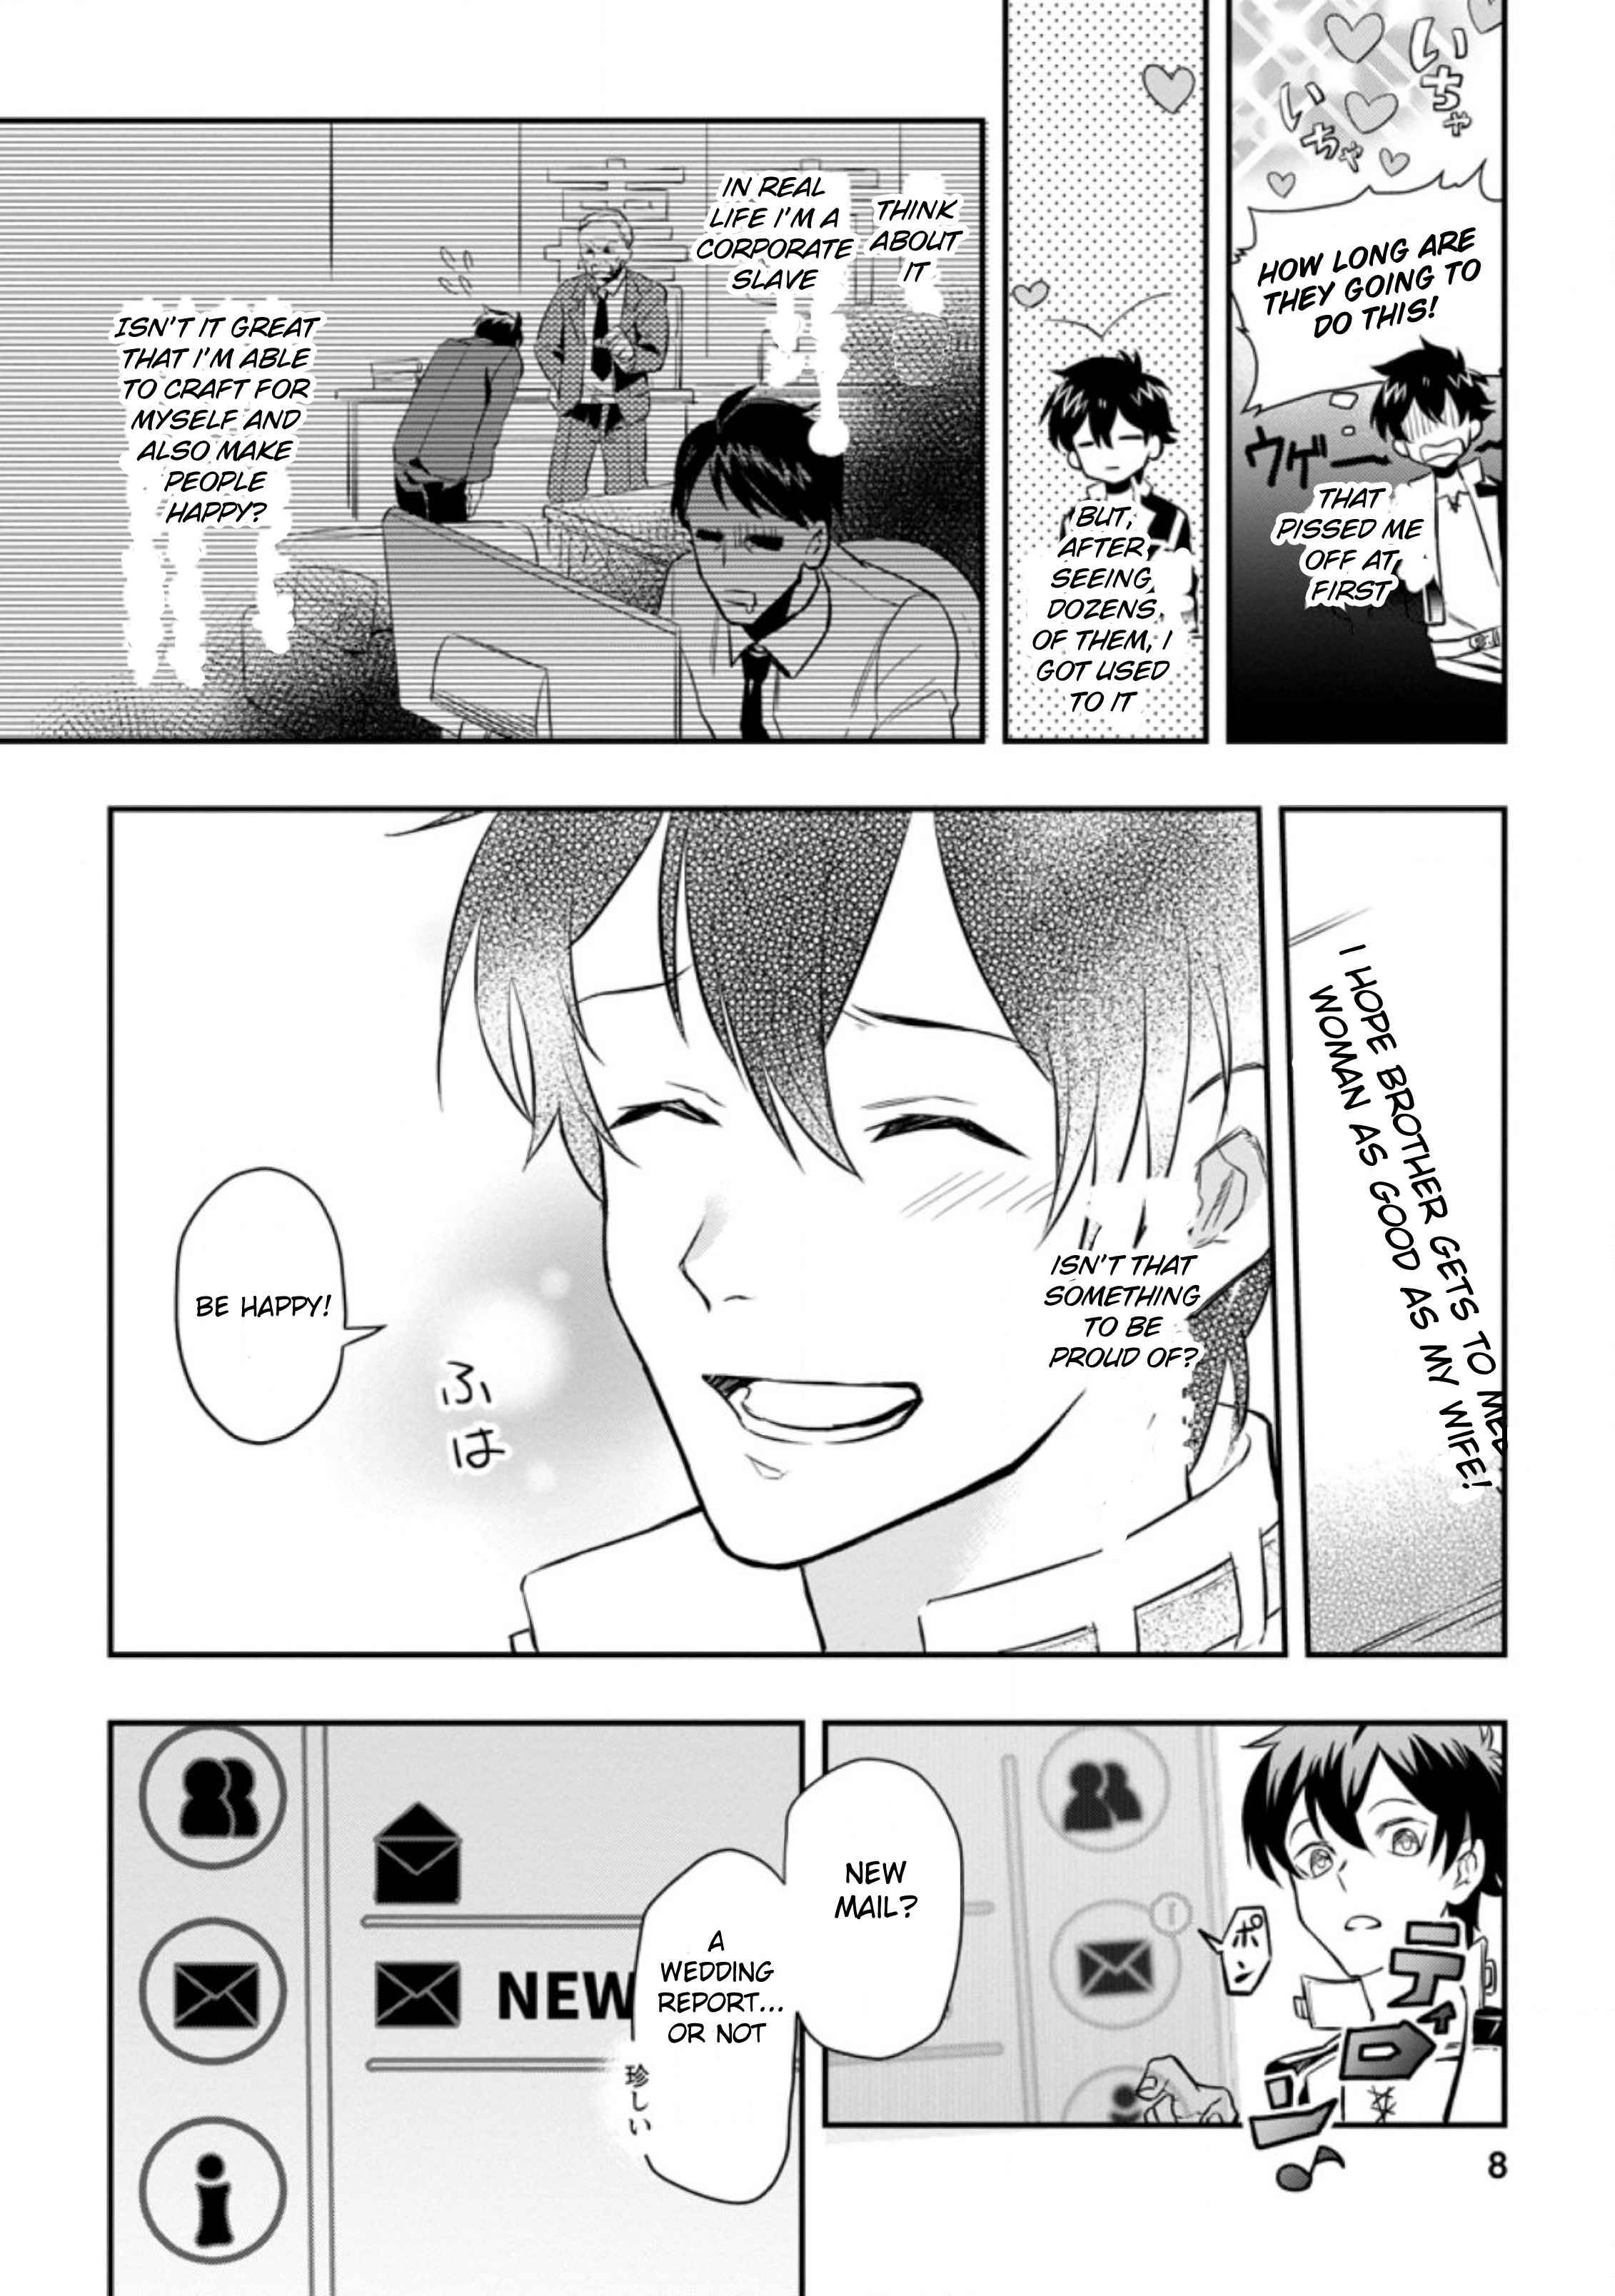 Isekai Meikyuu de Harem wo Capítulo 7.2 - Manga Online